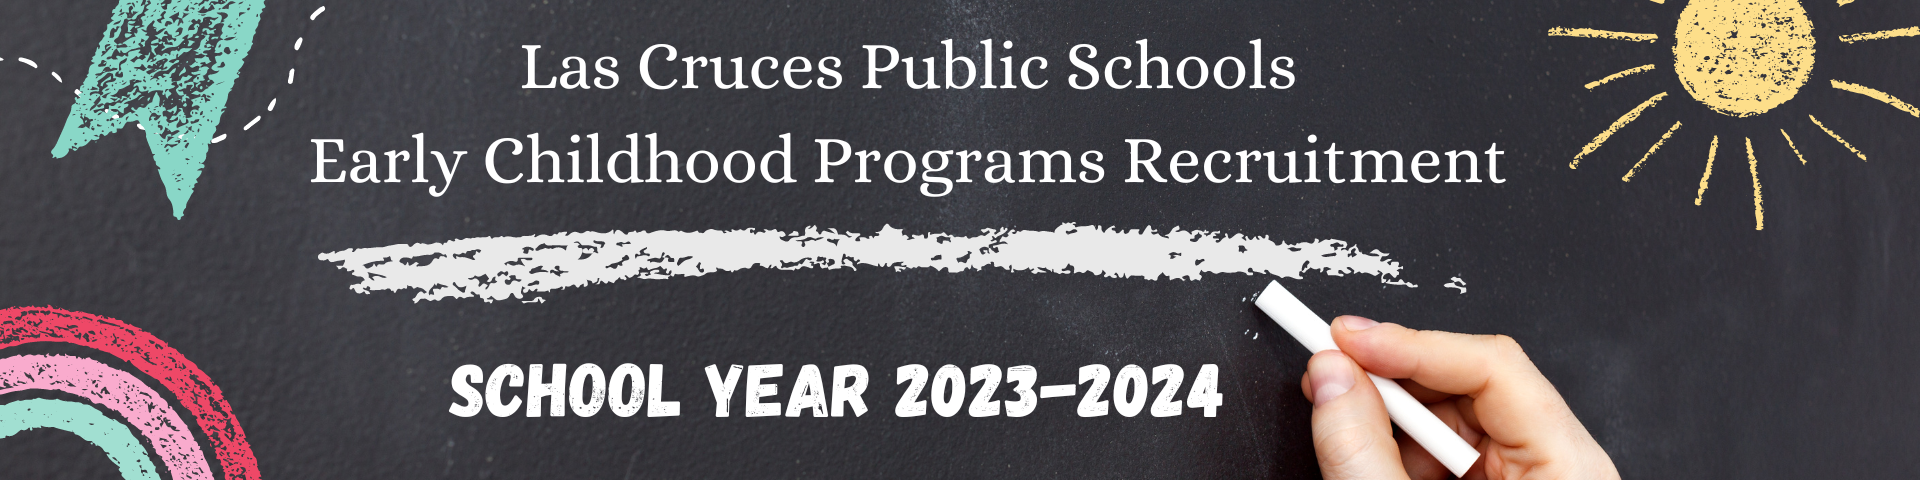 Las Cruces Public Schools Early Childhood Programs Recruitment School Year 2023-2024 Flyer